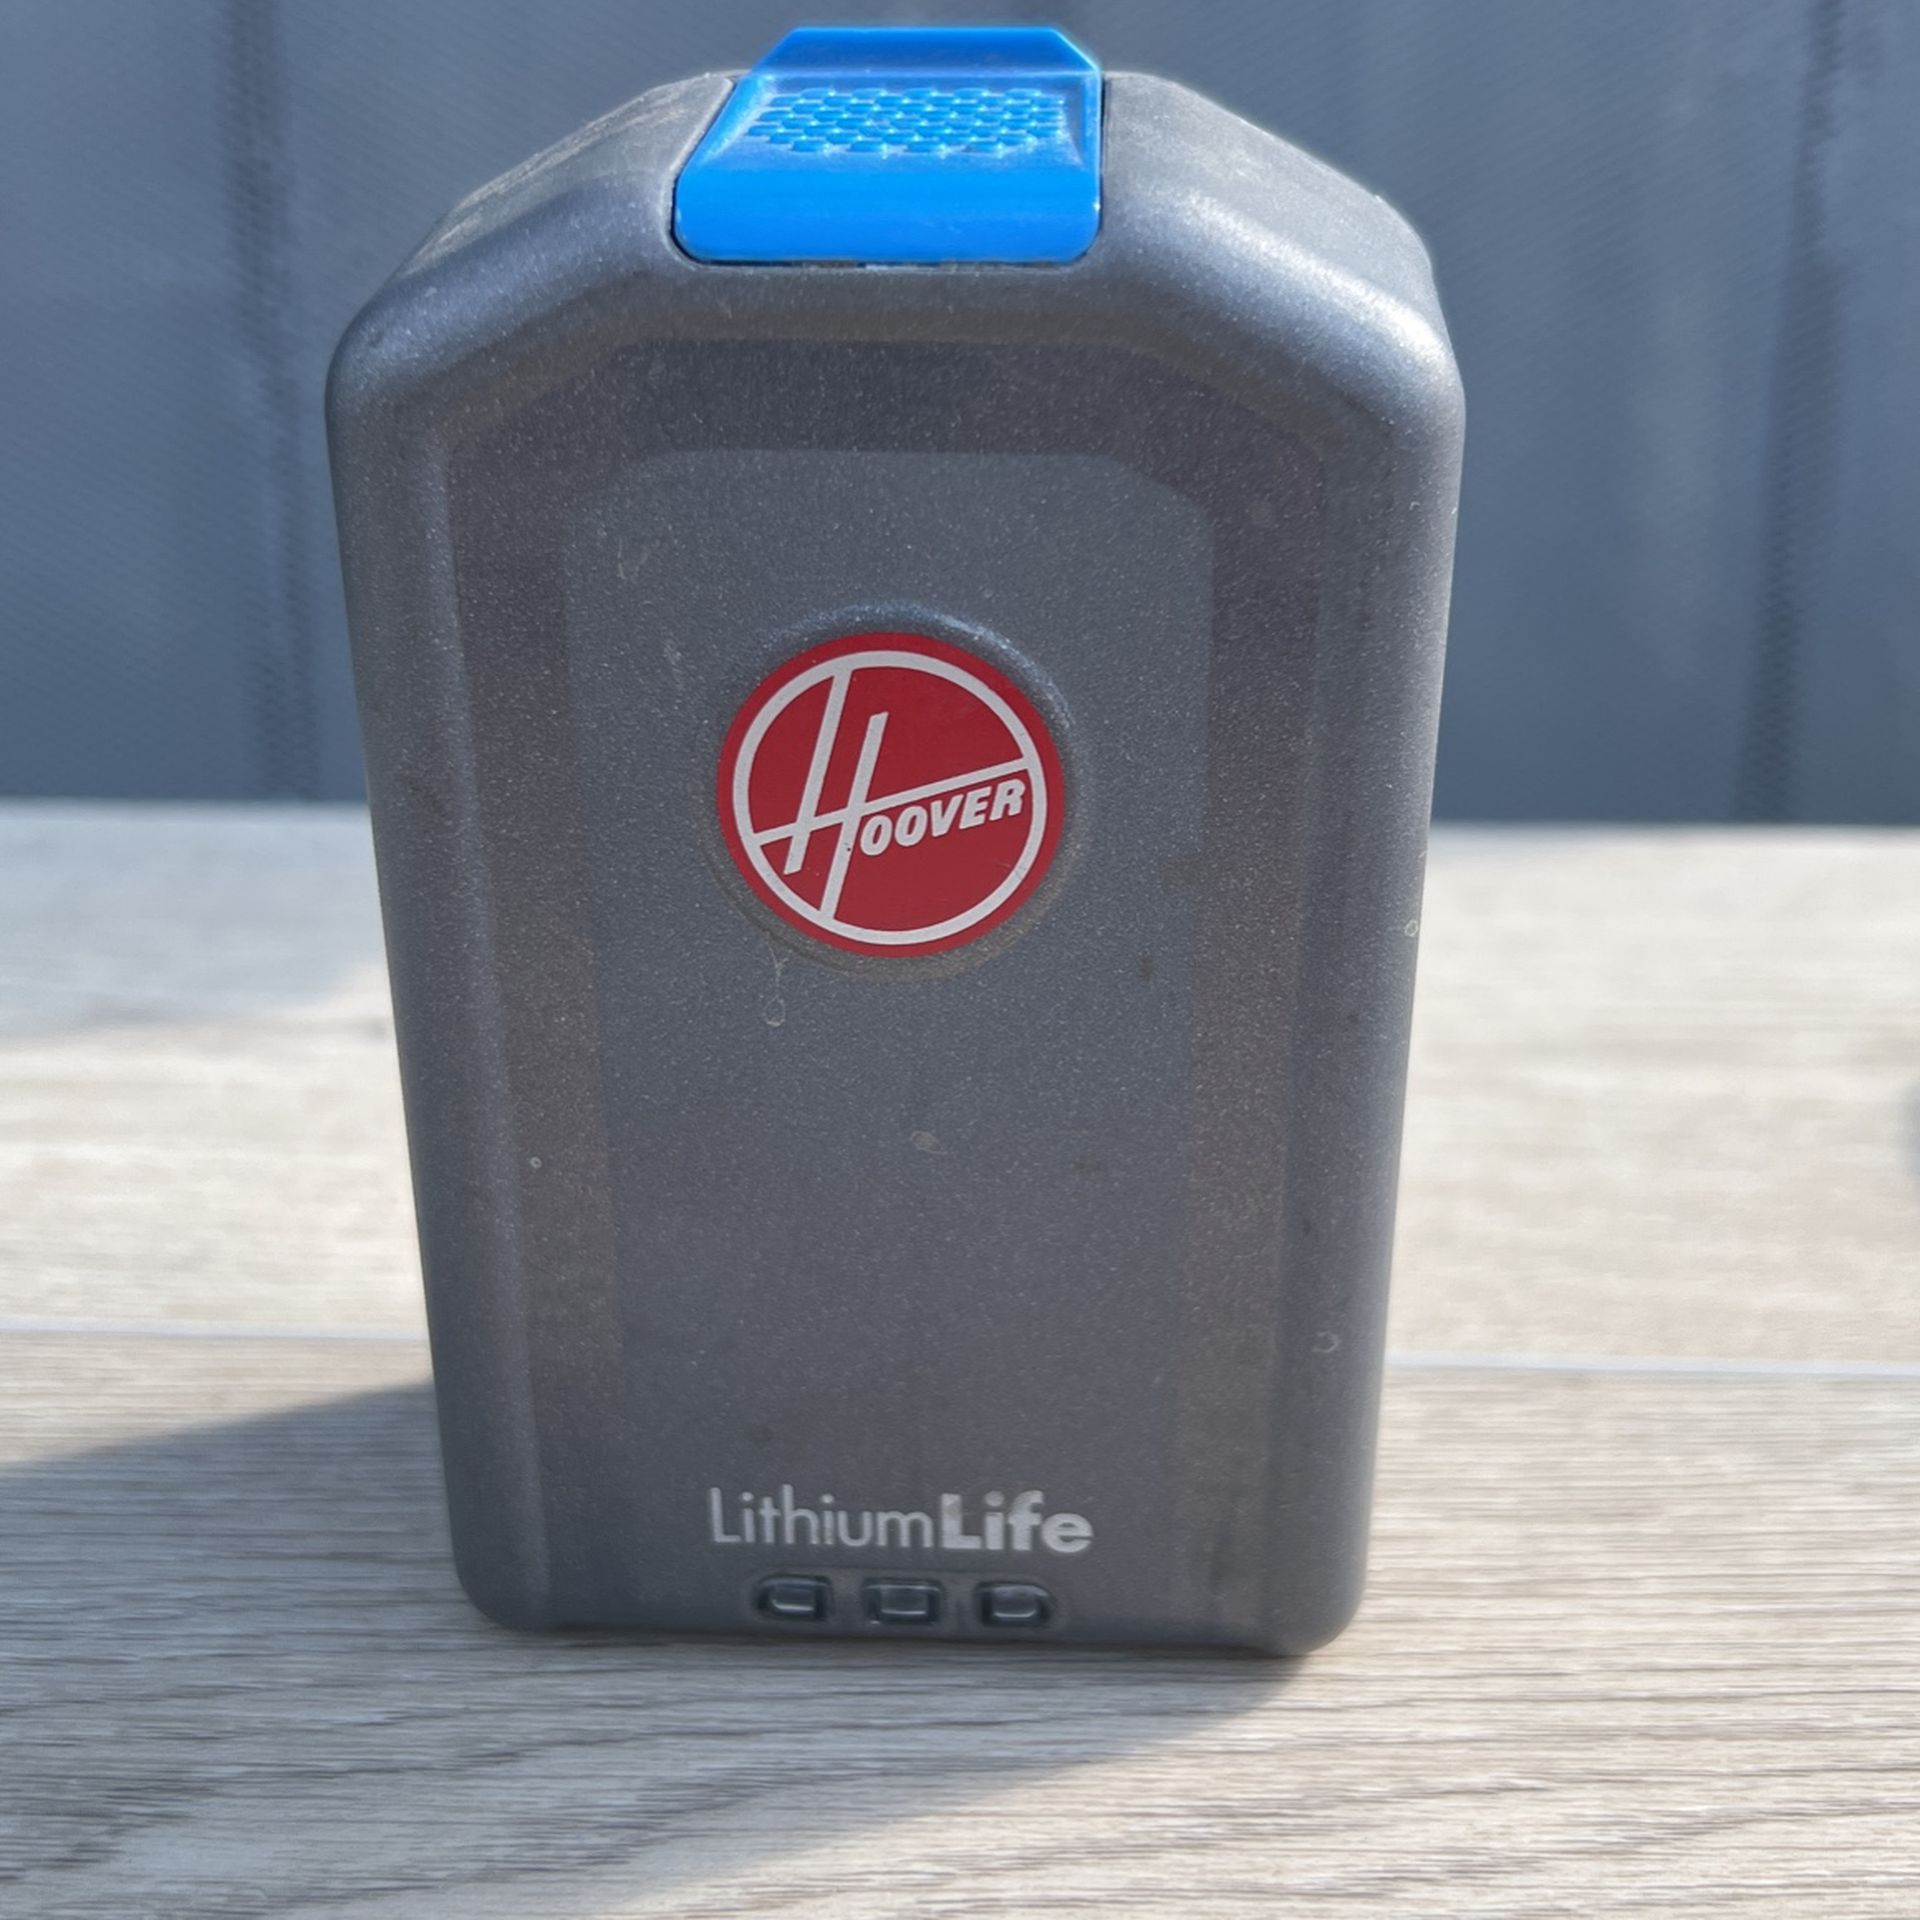 Hoover 20V Lithium Life Battery